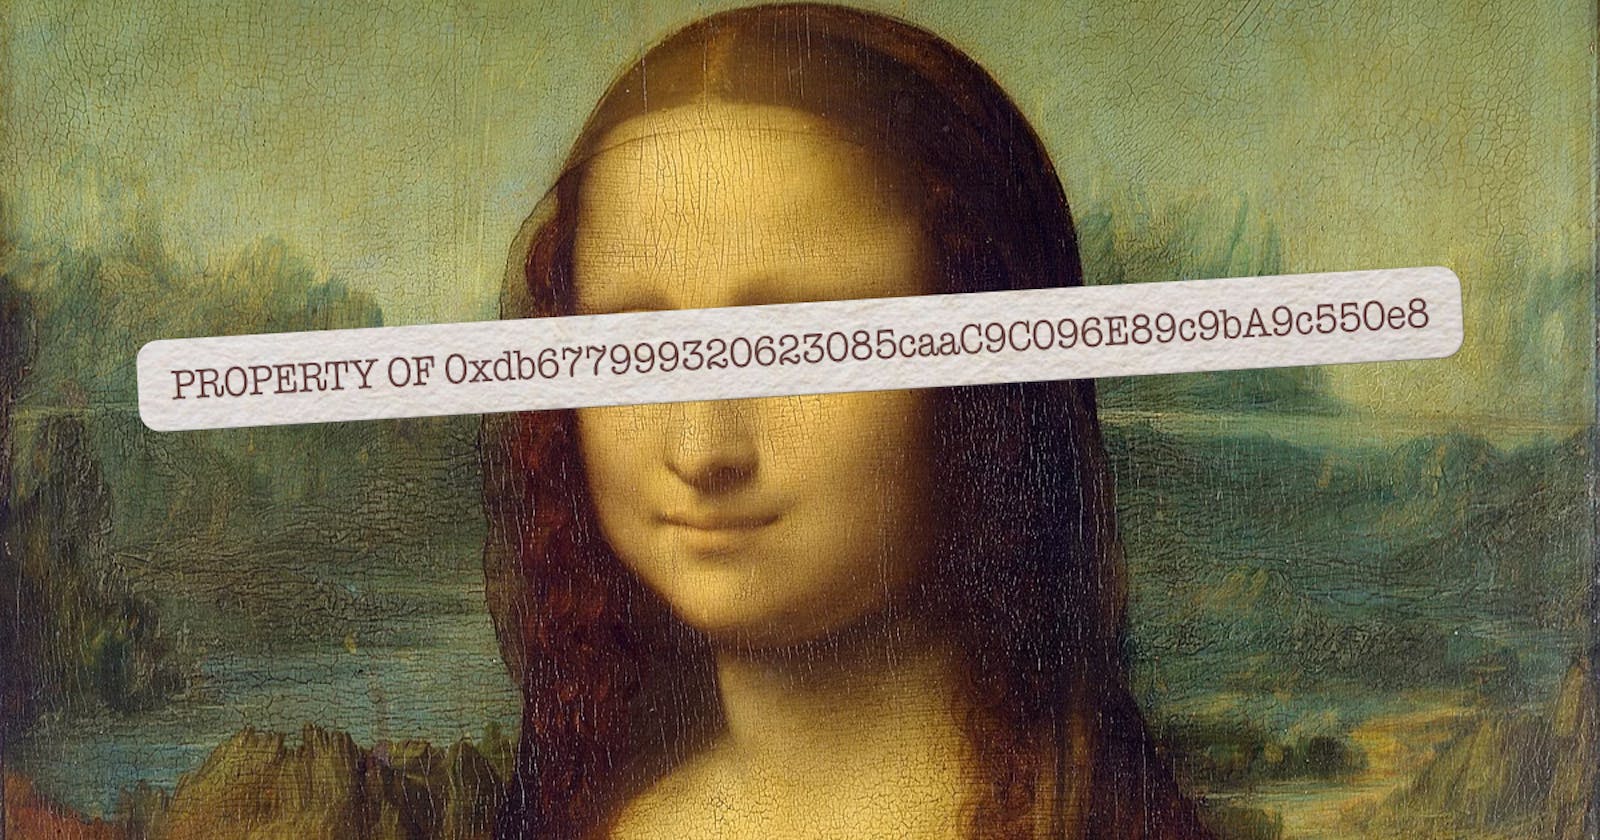 Analogy Fact Check #1: Owning the Mona Lisa